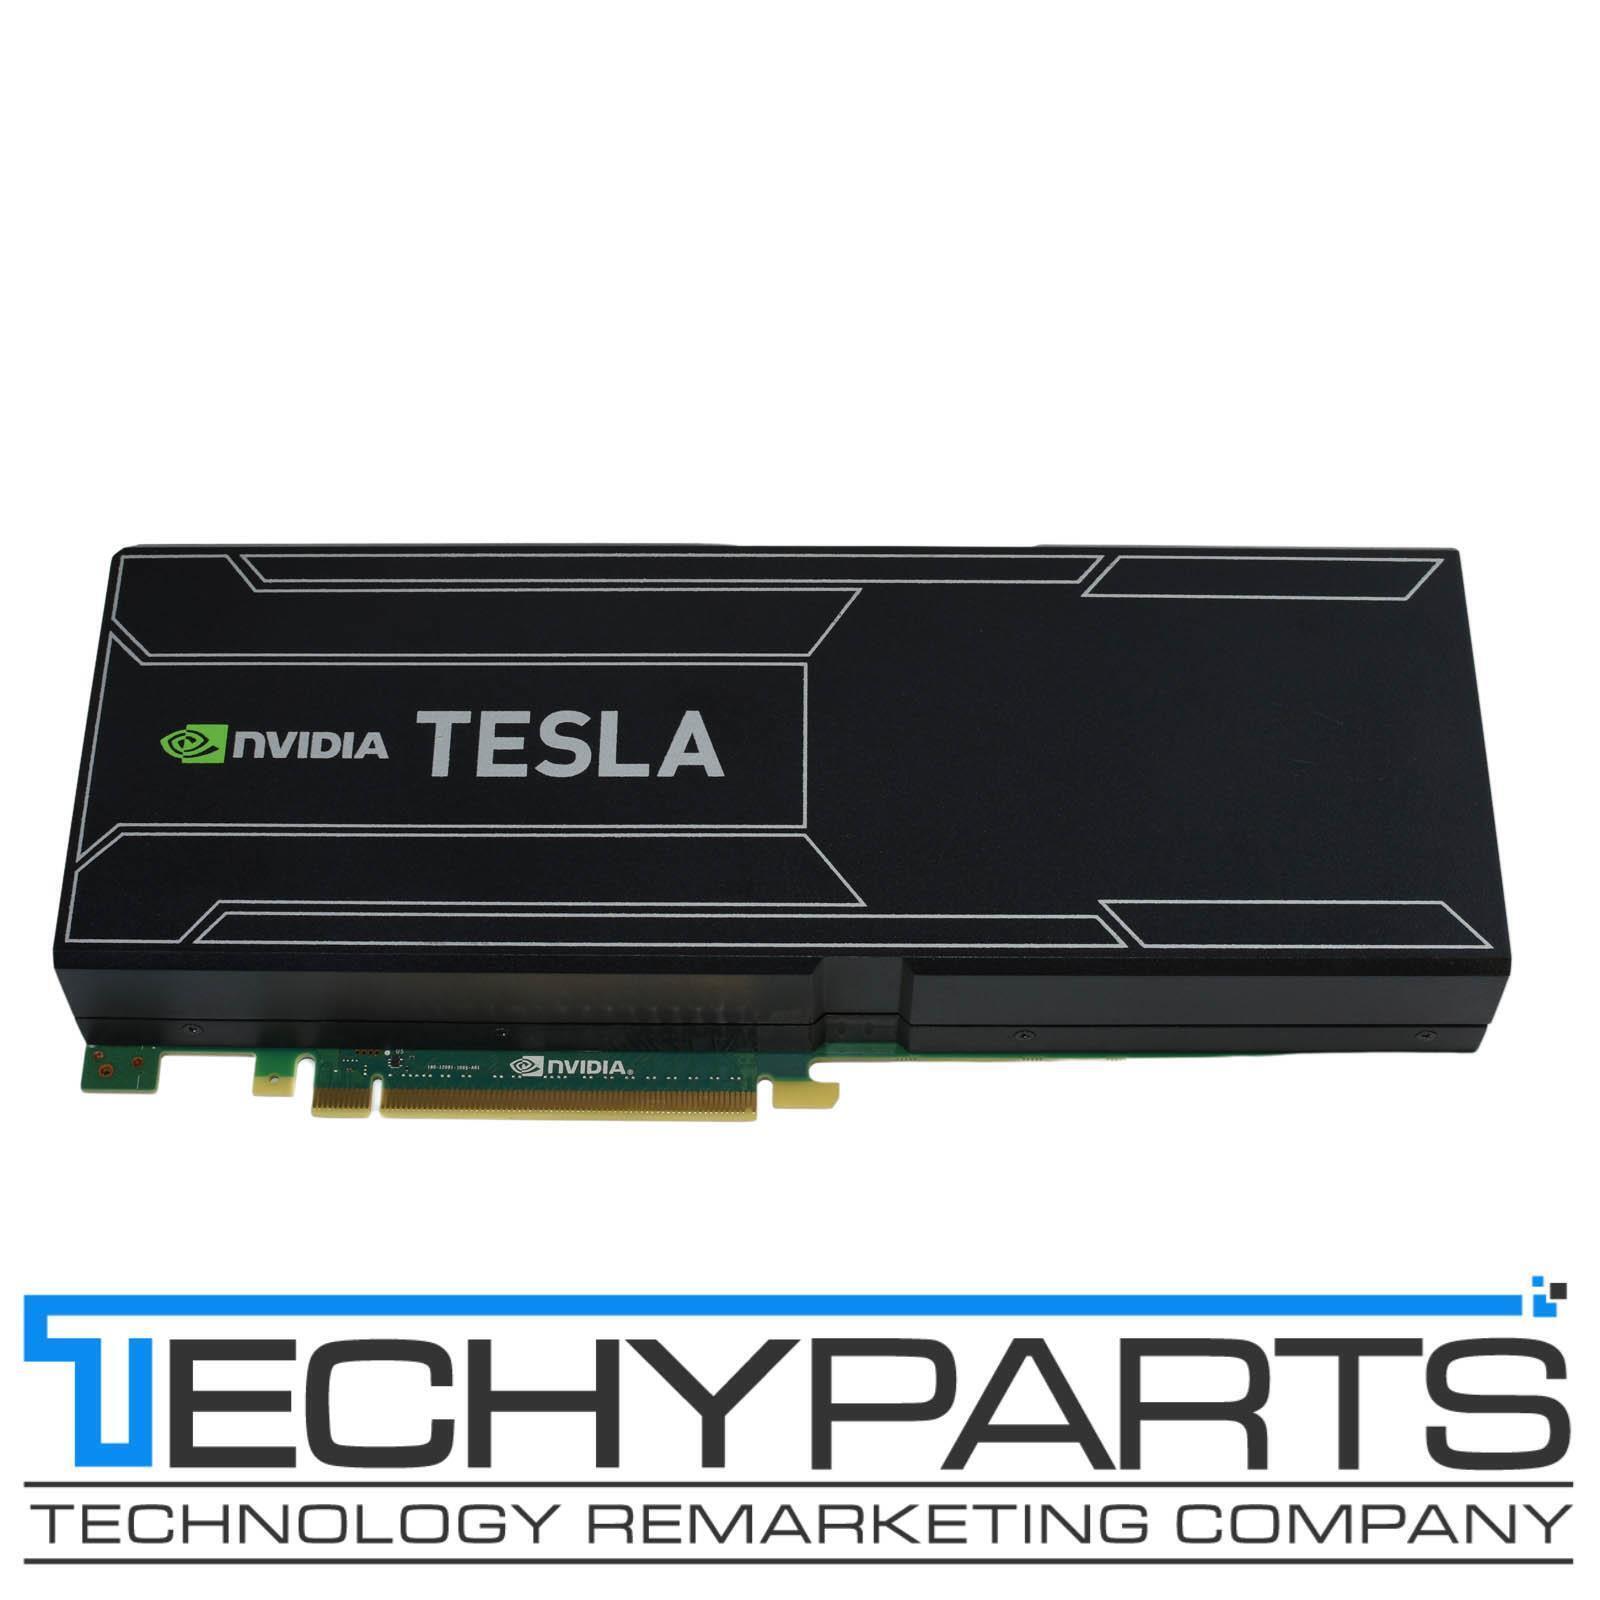 Lot of 10x NVIDIA Tesla K40m 12GB GDDR5 Passive CUDA GPU PCI-e Accelerator Card